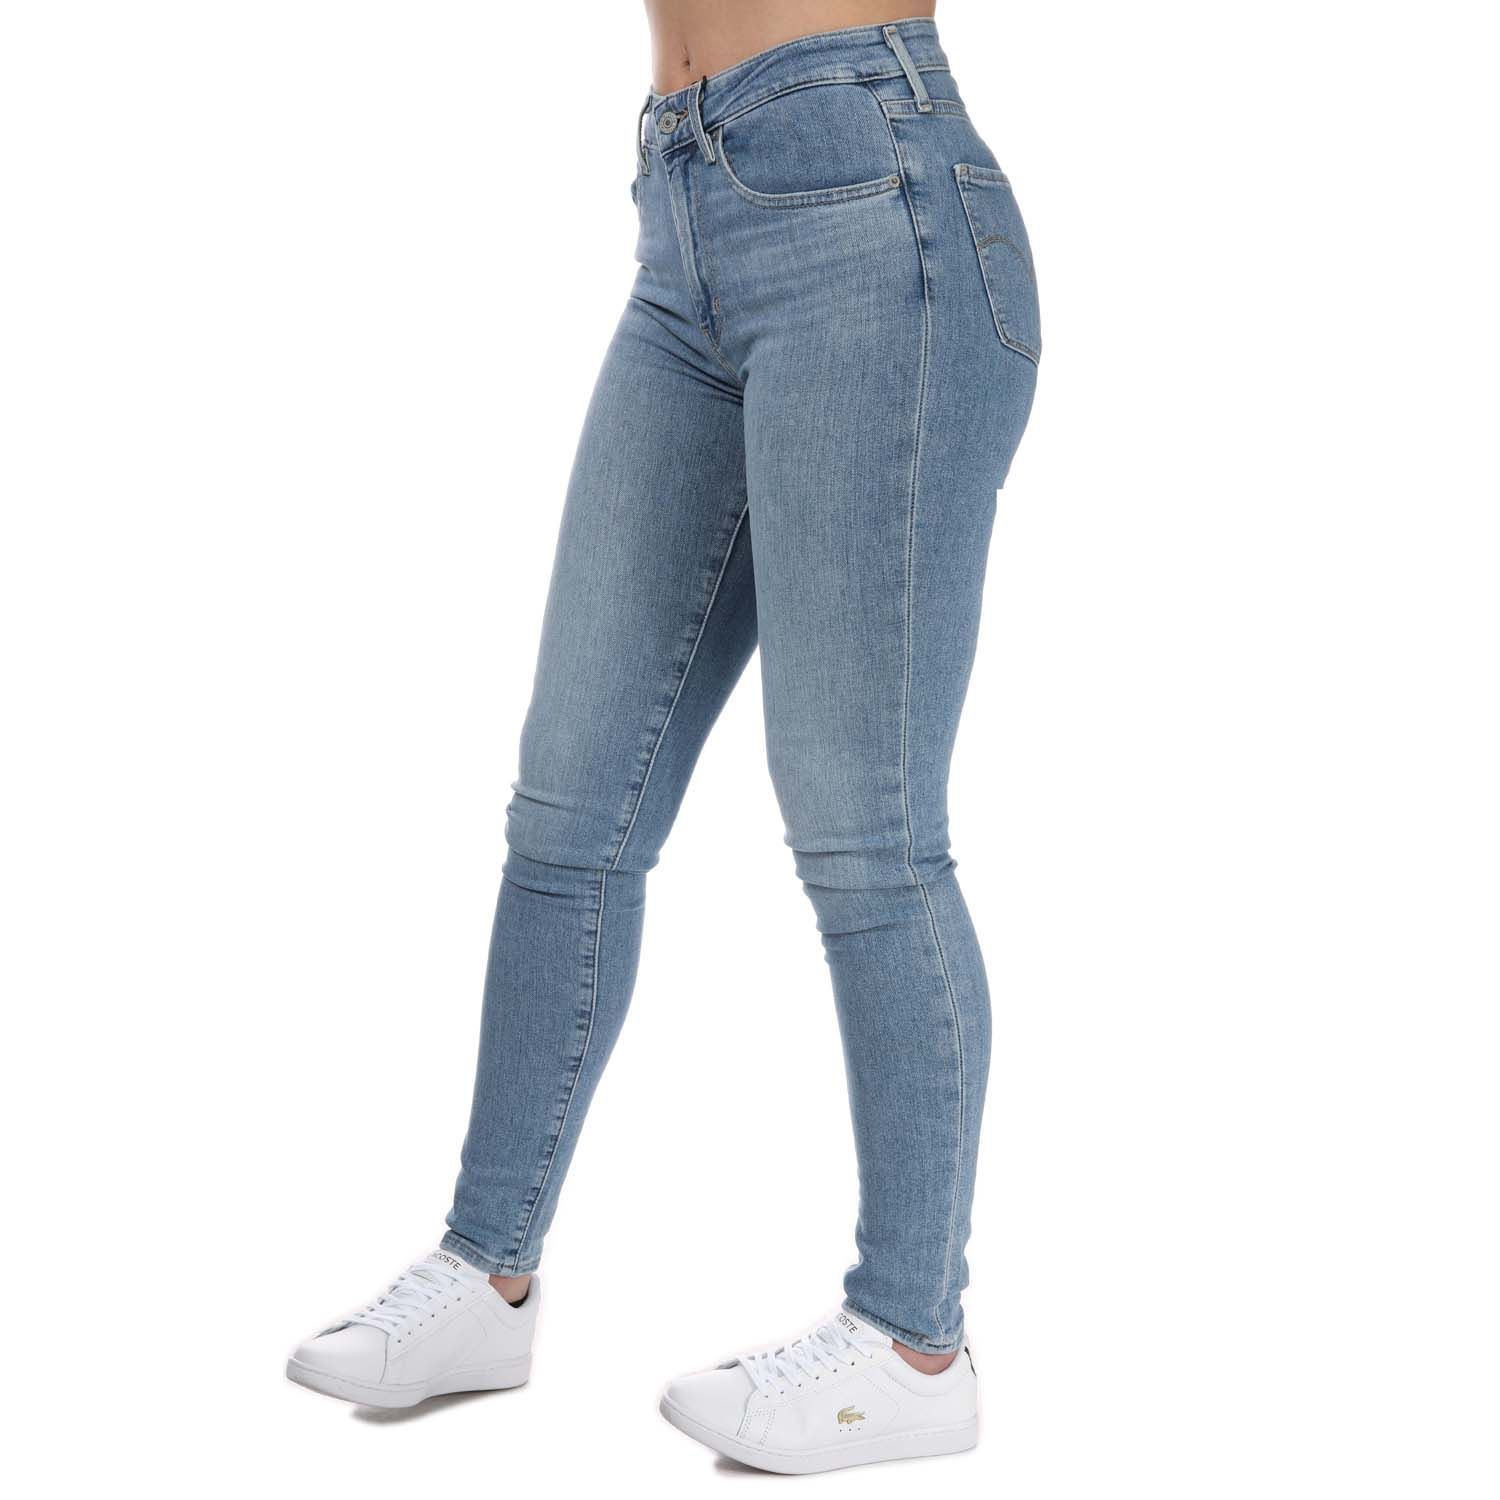 Women's Levis 721 High Rise Skinny Jeans in Light Blue